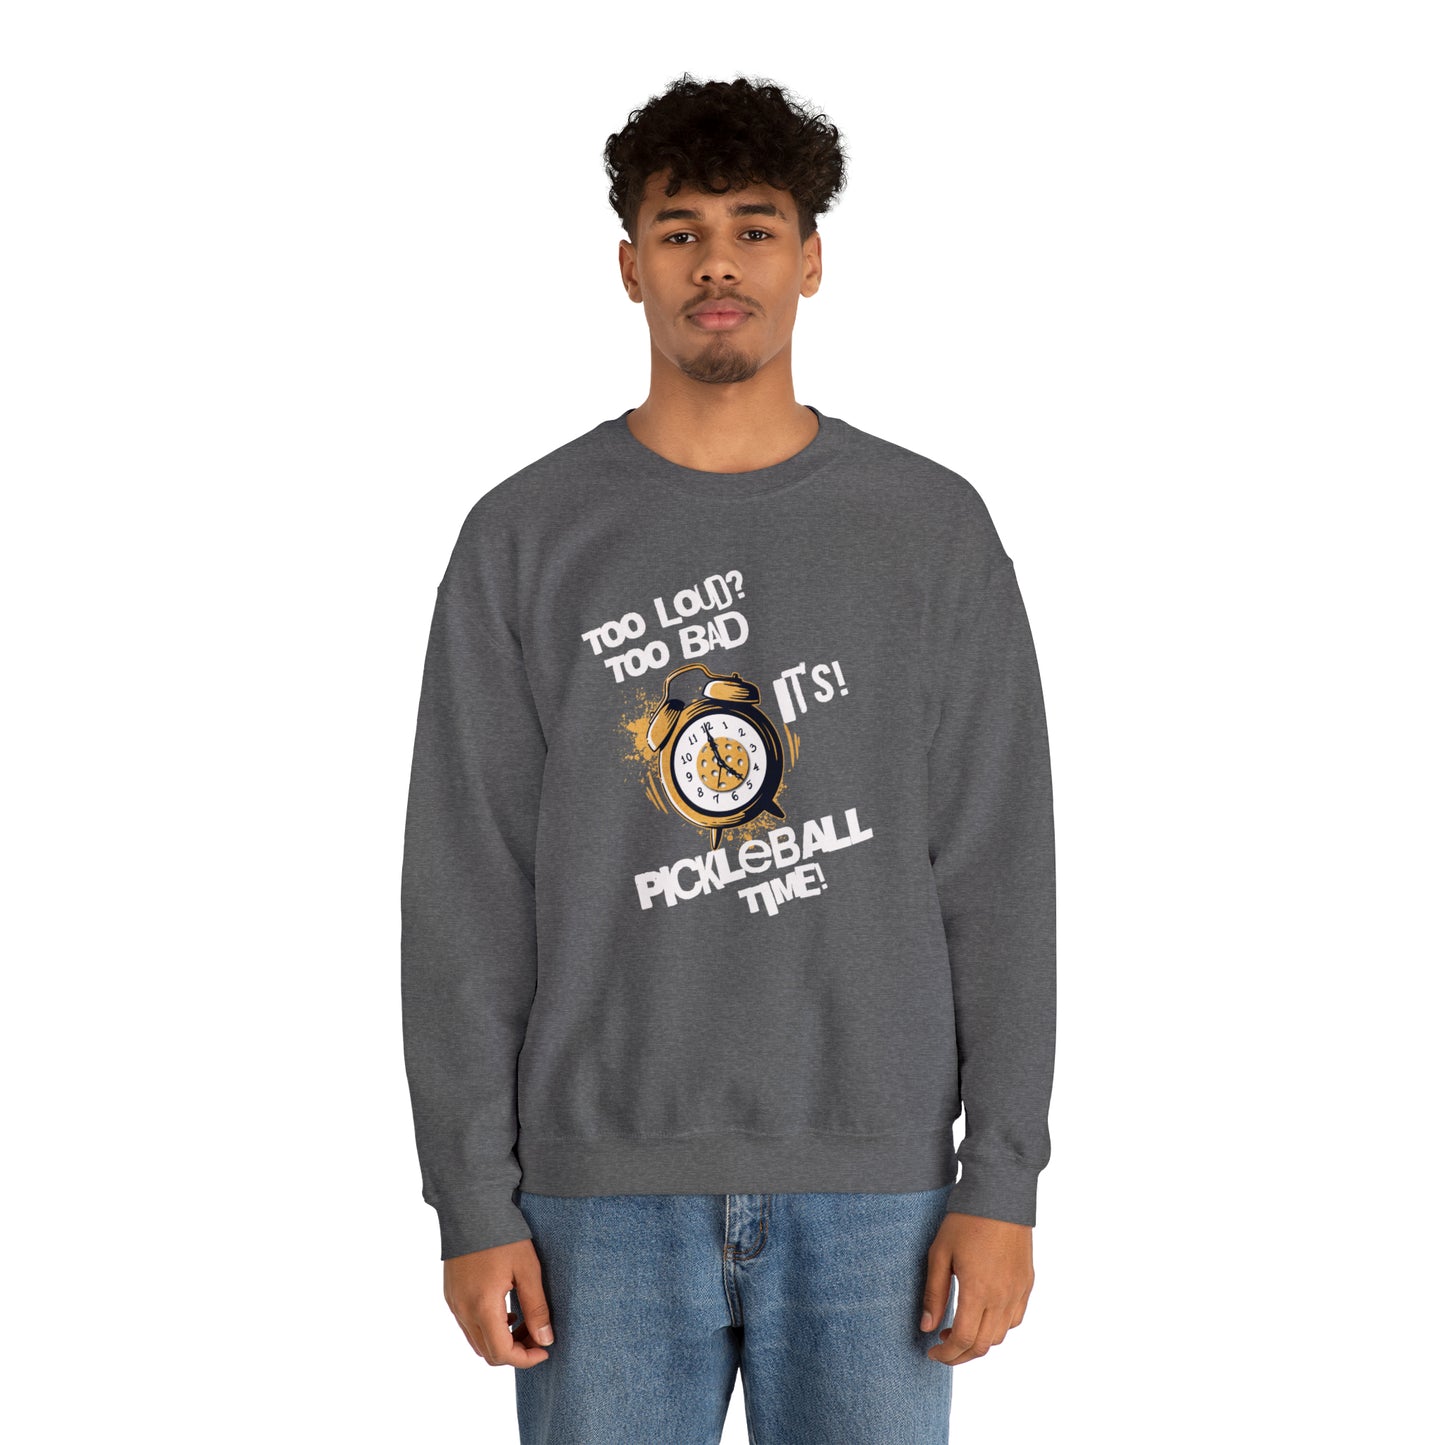 Too Loud, Too Bad, It's Pickleball Time Sweatshirt